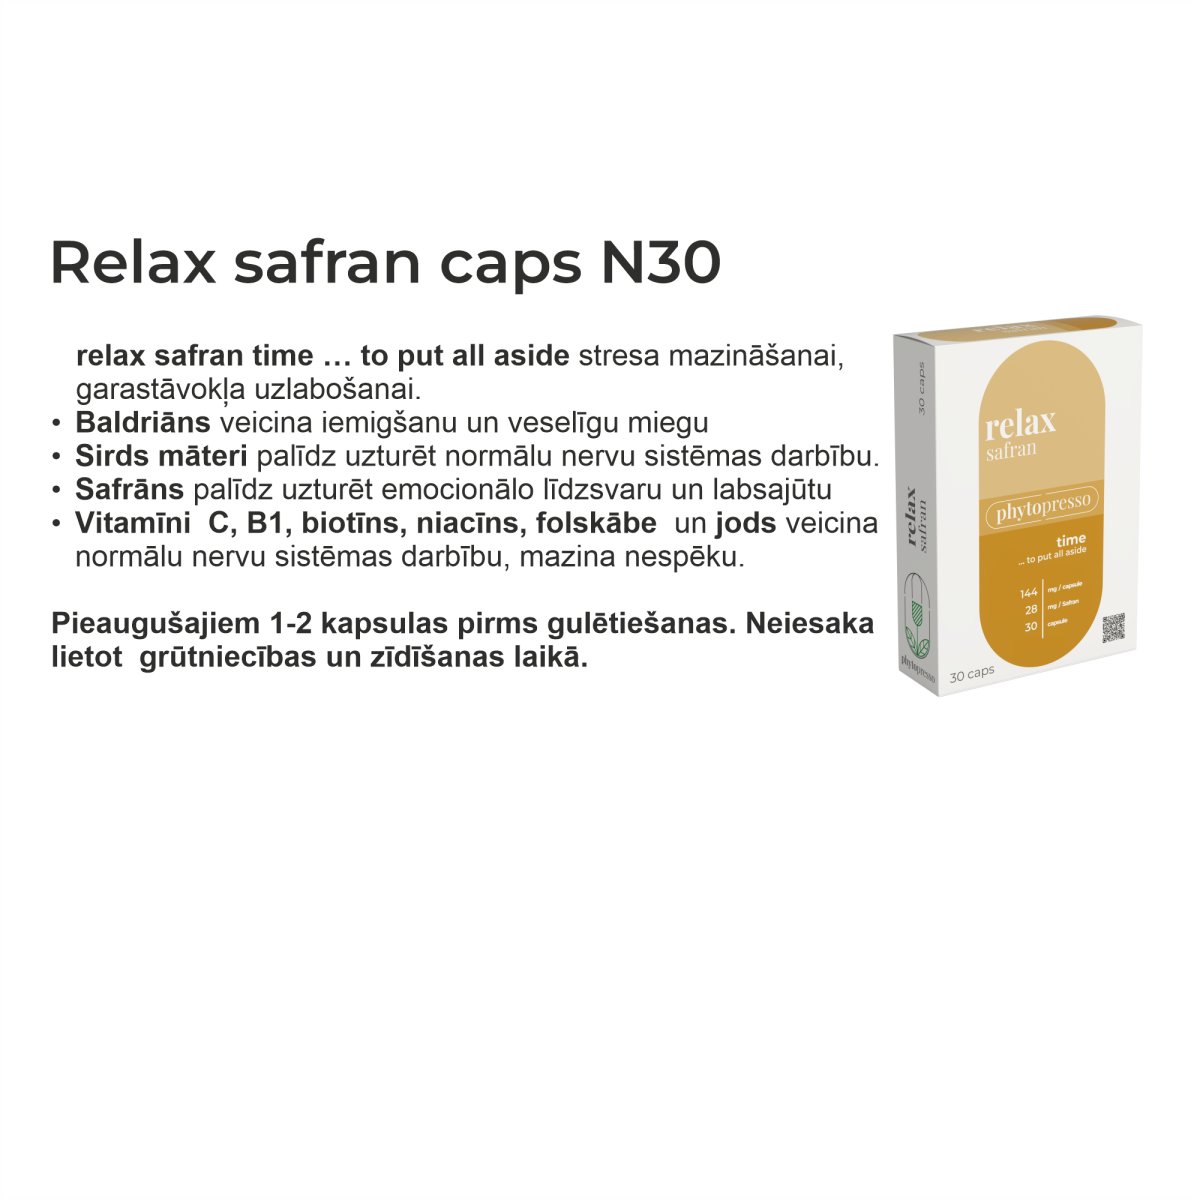 Ingredients capsules relax safran square